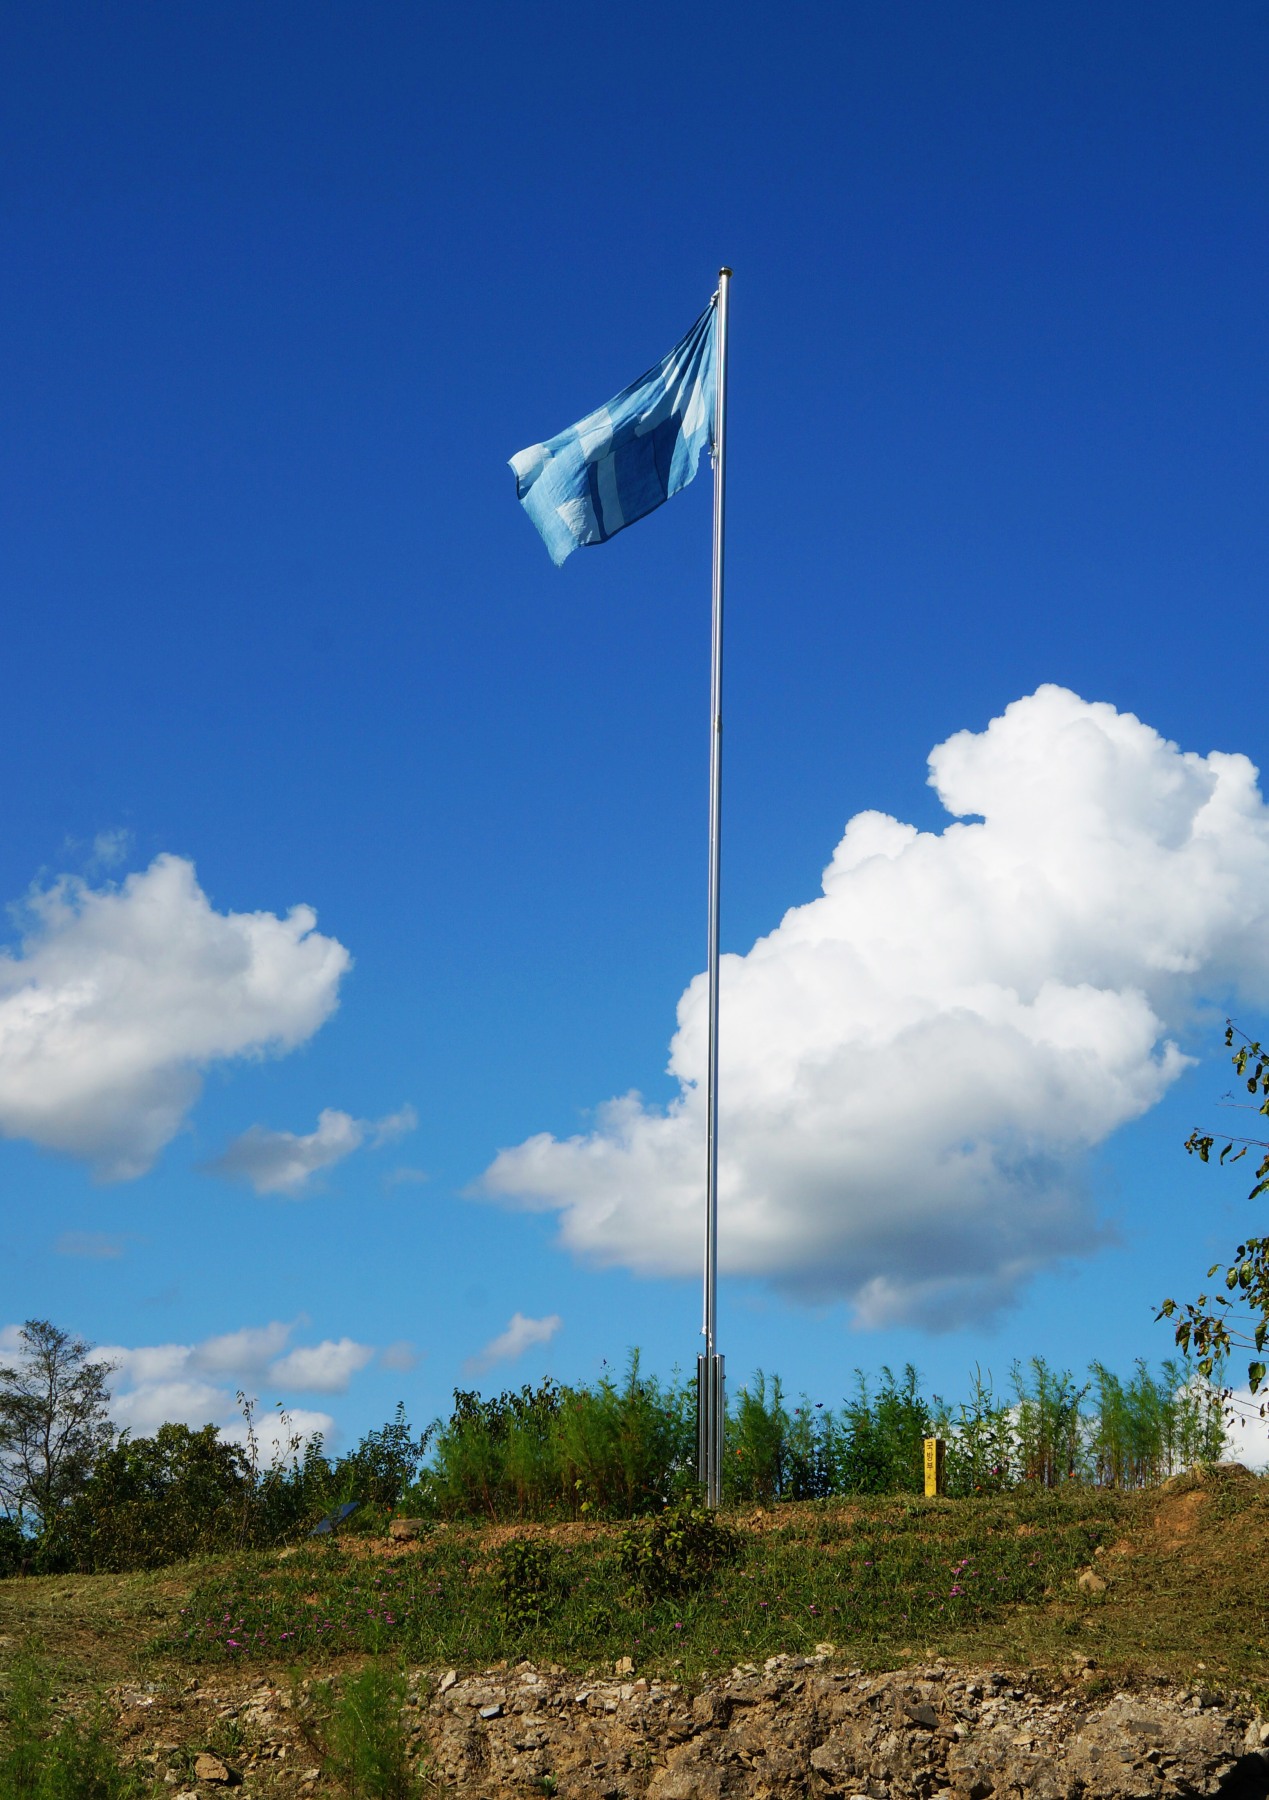 blue flag waving against a vibrant blue sky